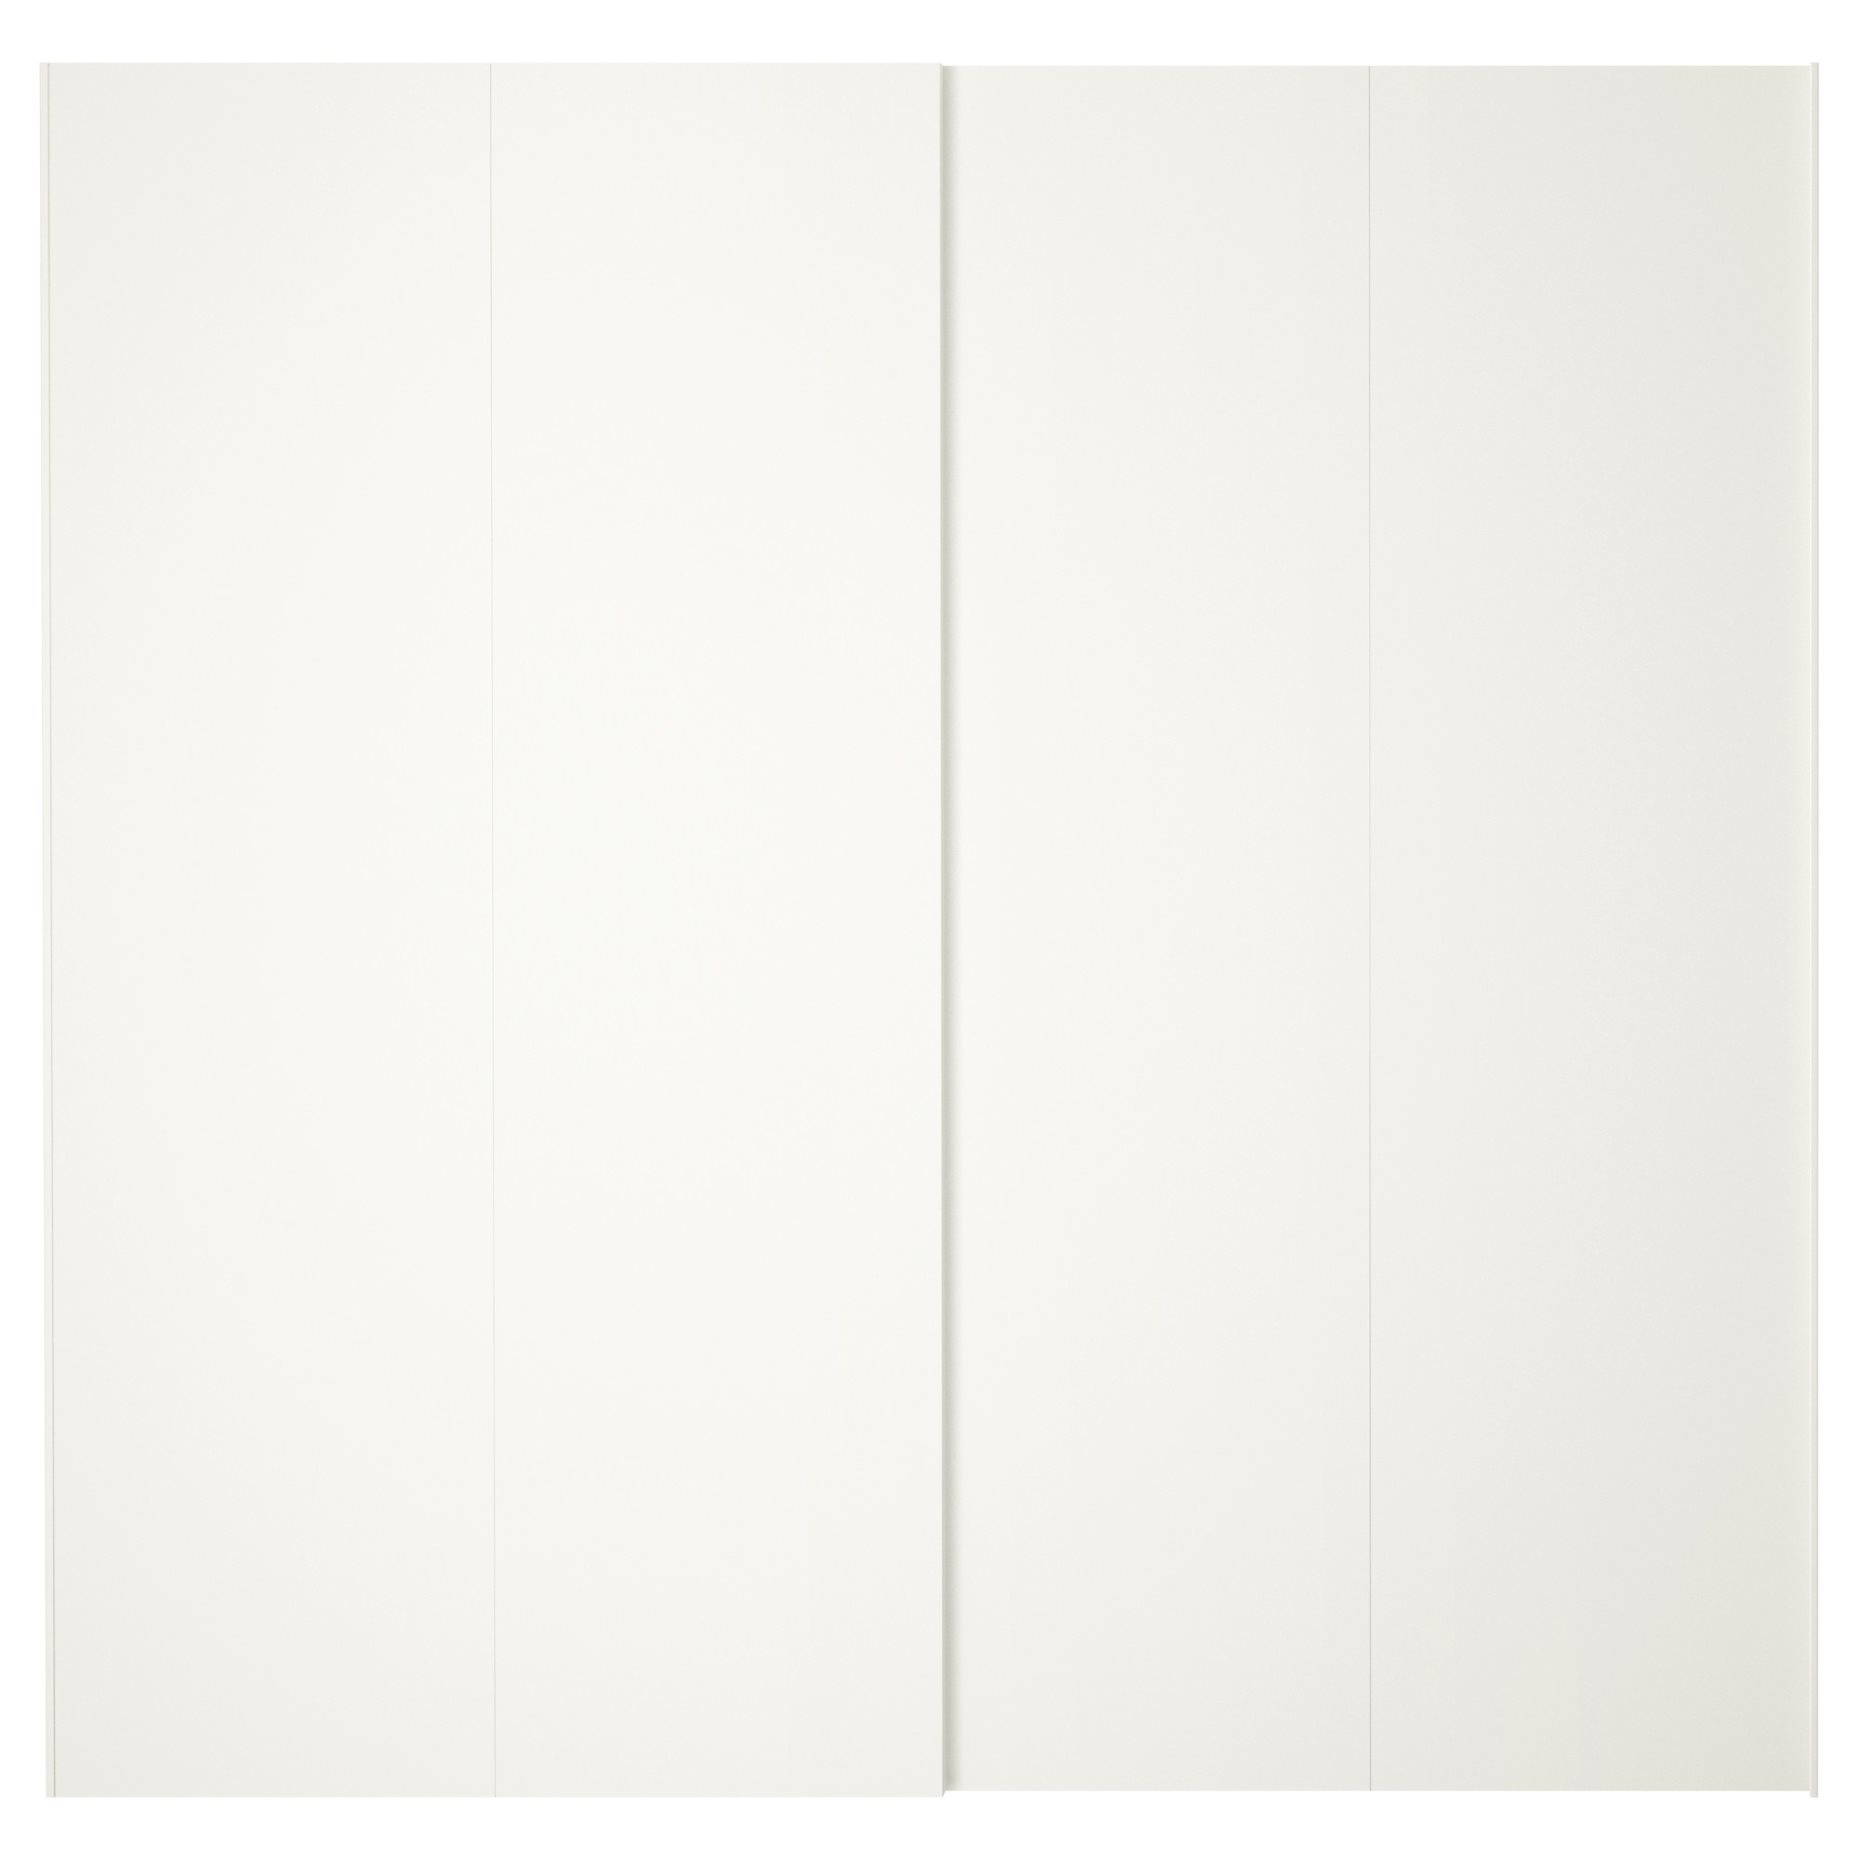 HASVIK, pair of sliding doors, 200x201 cm, 705.215.39